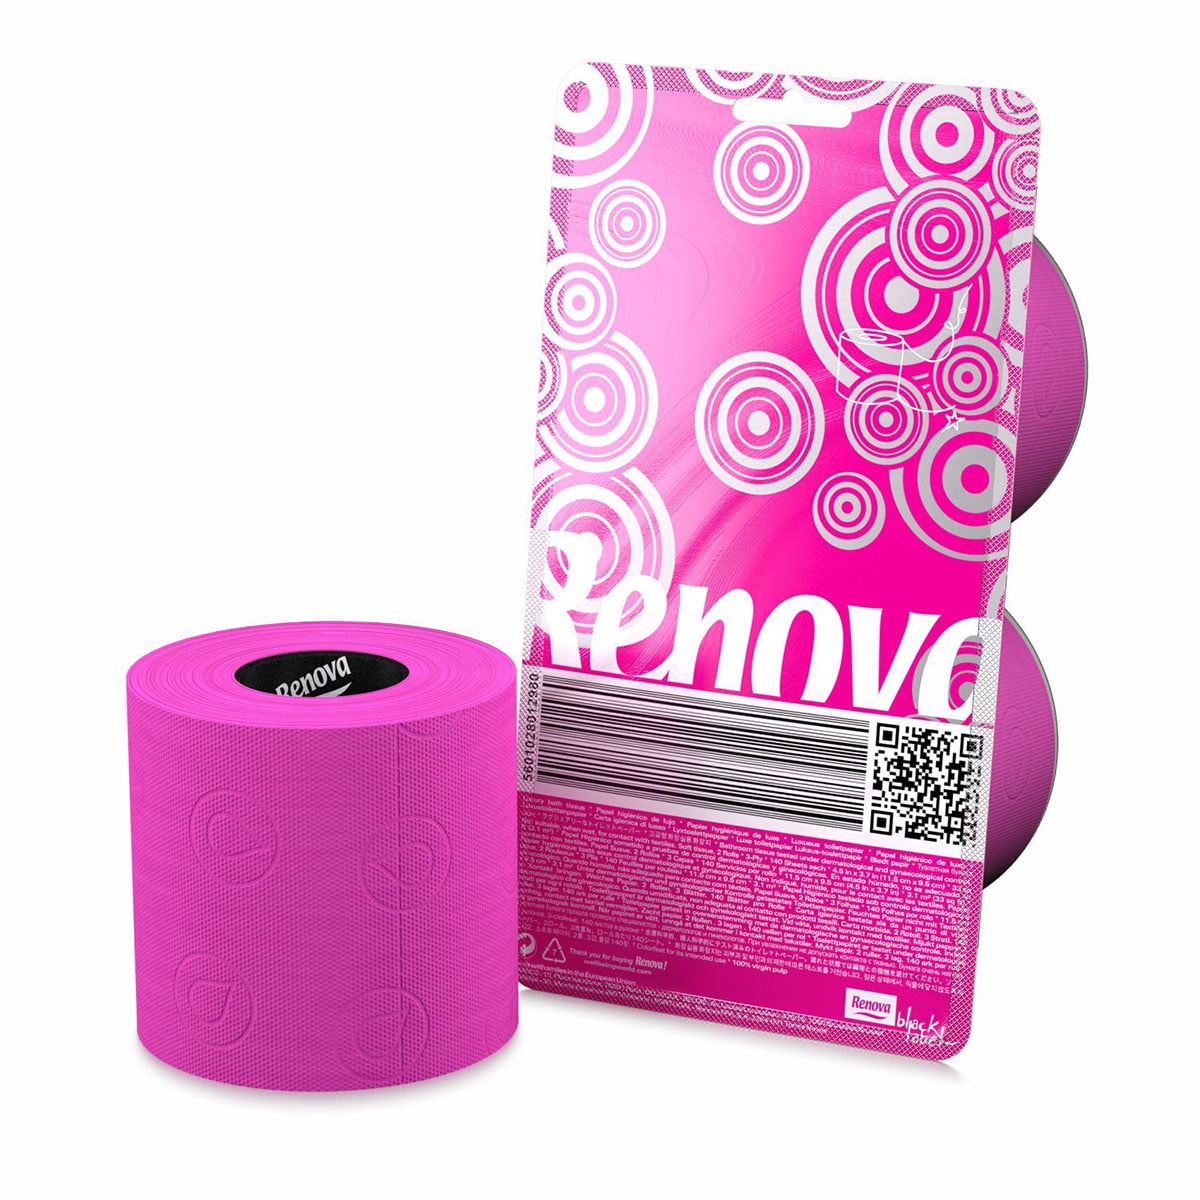 Renova Pink Toilet Paper Blister Pack, 2 Rolls, 140 Sheets Per